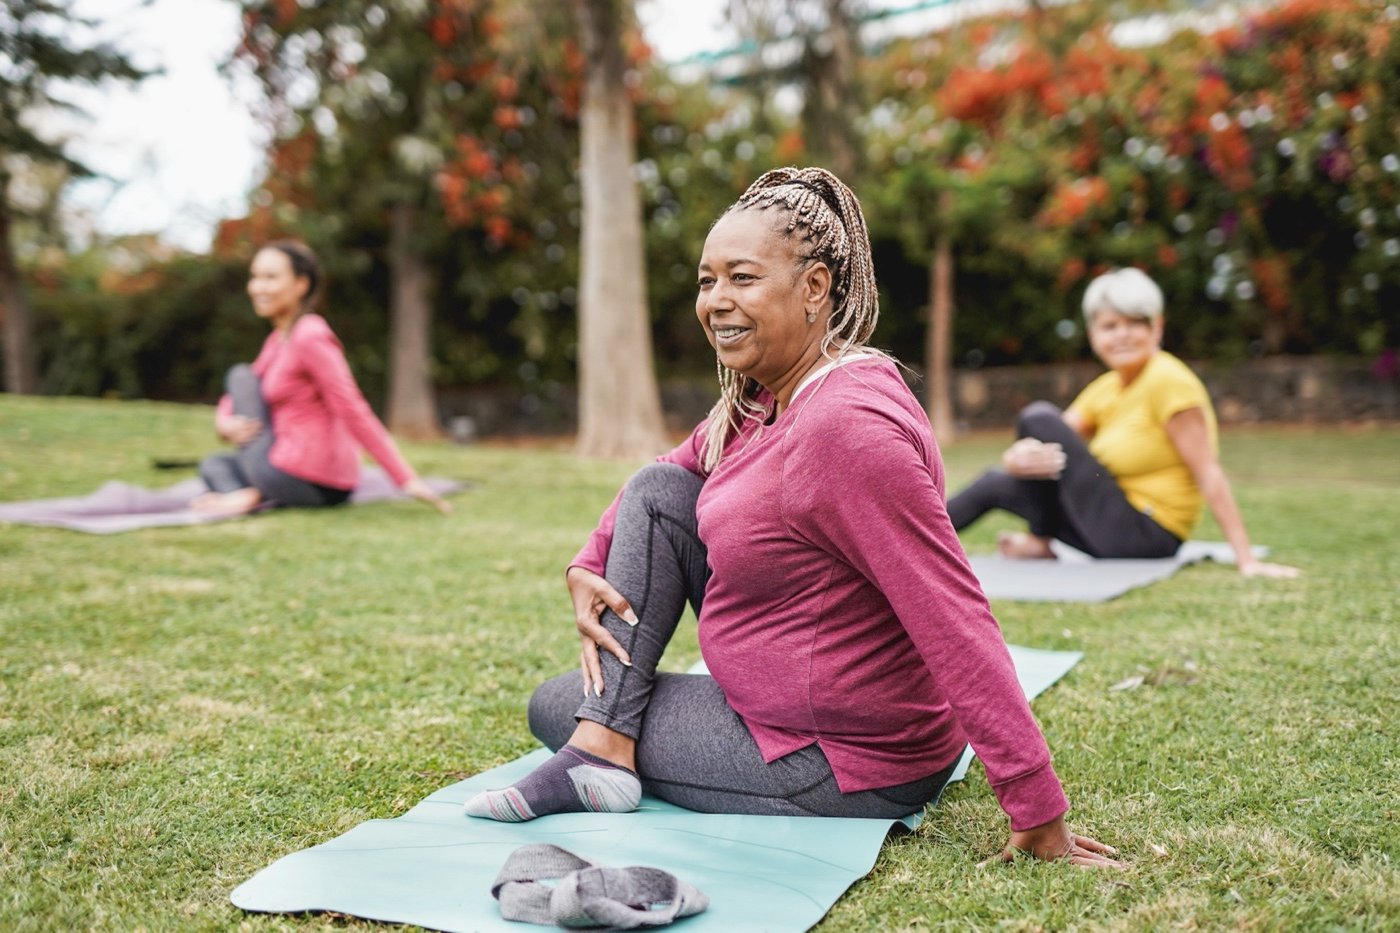 Senior women participating in an outdoor yoga class